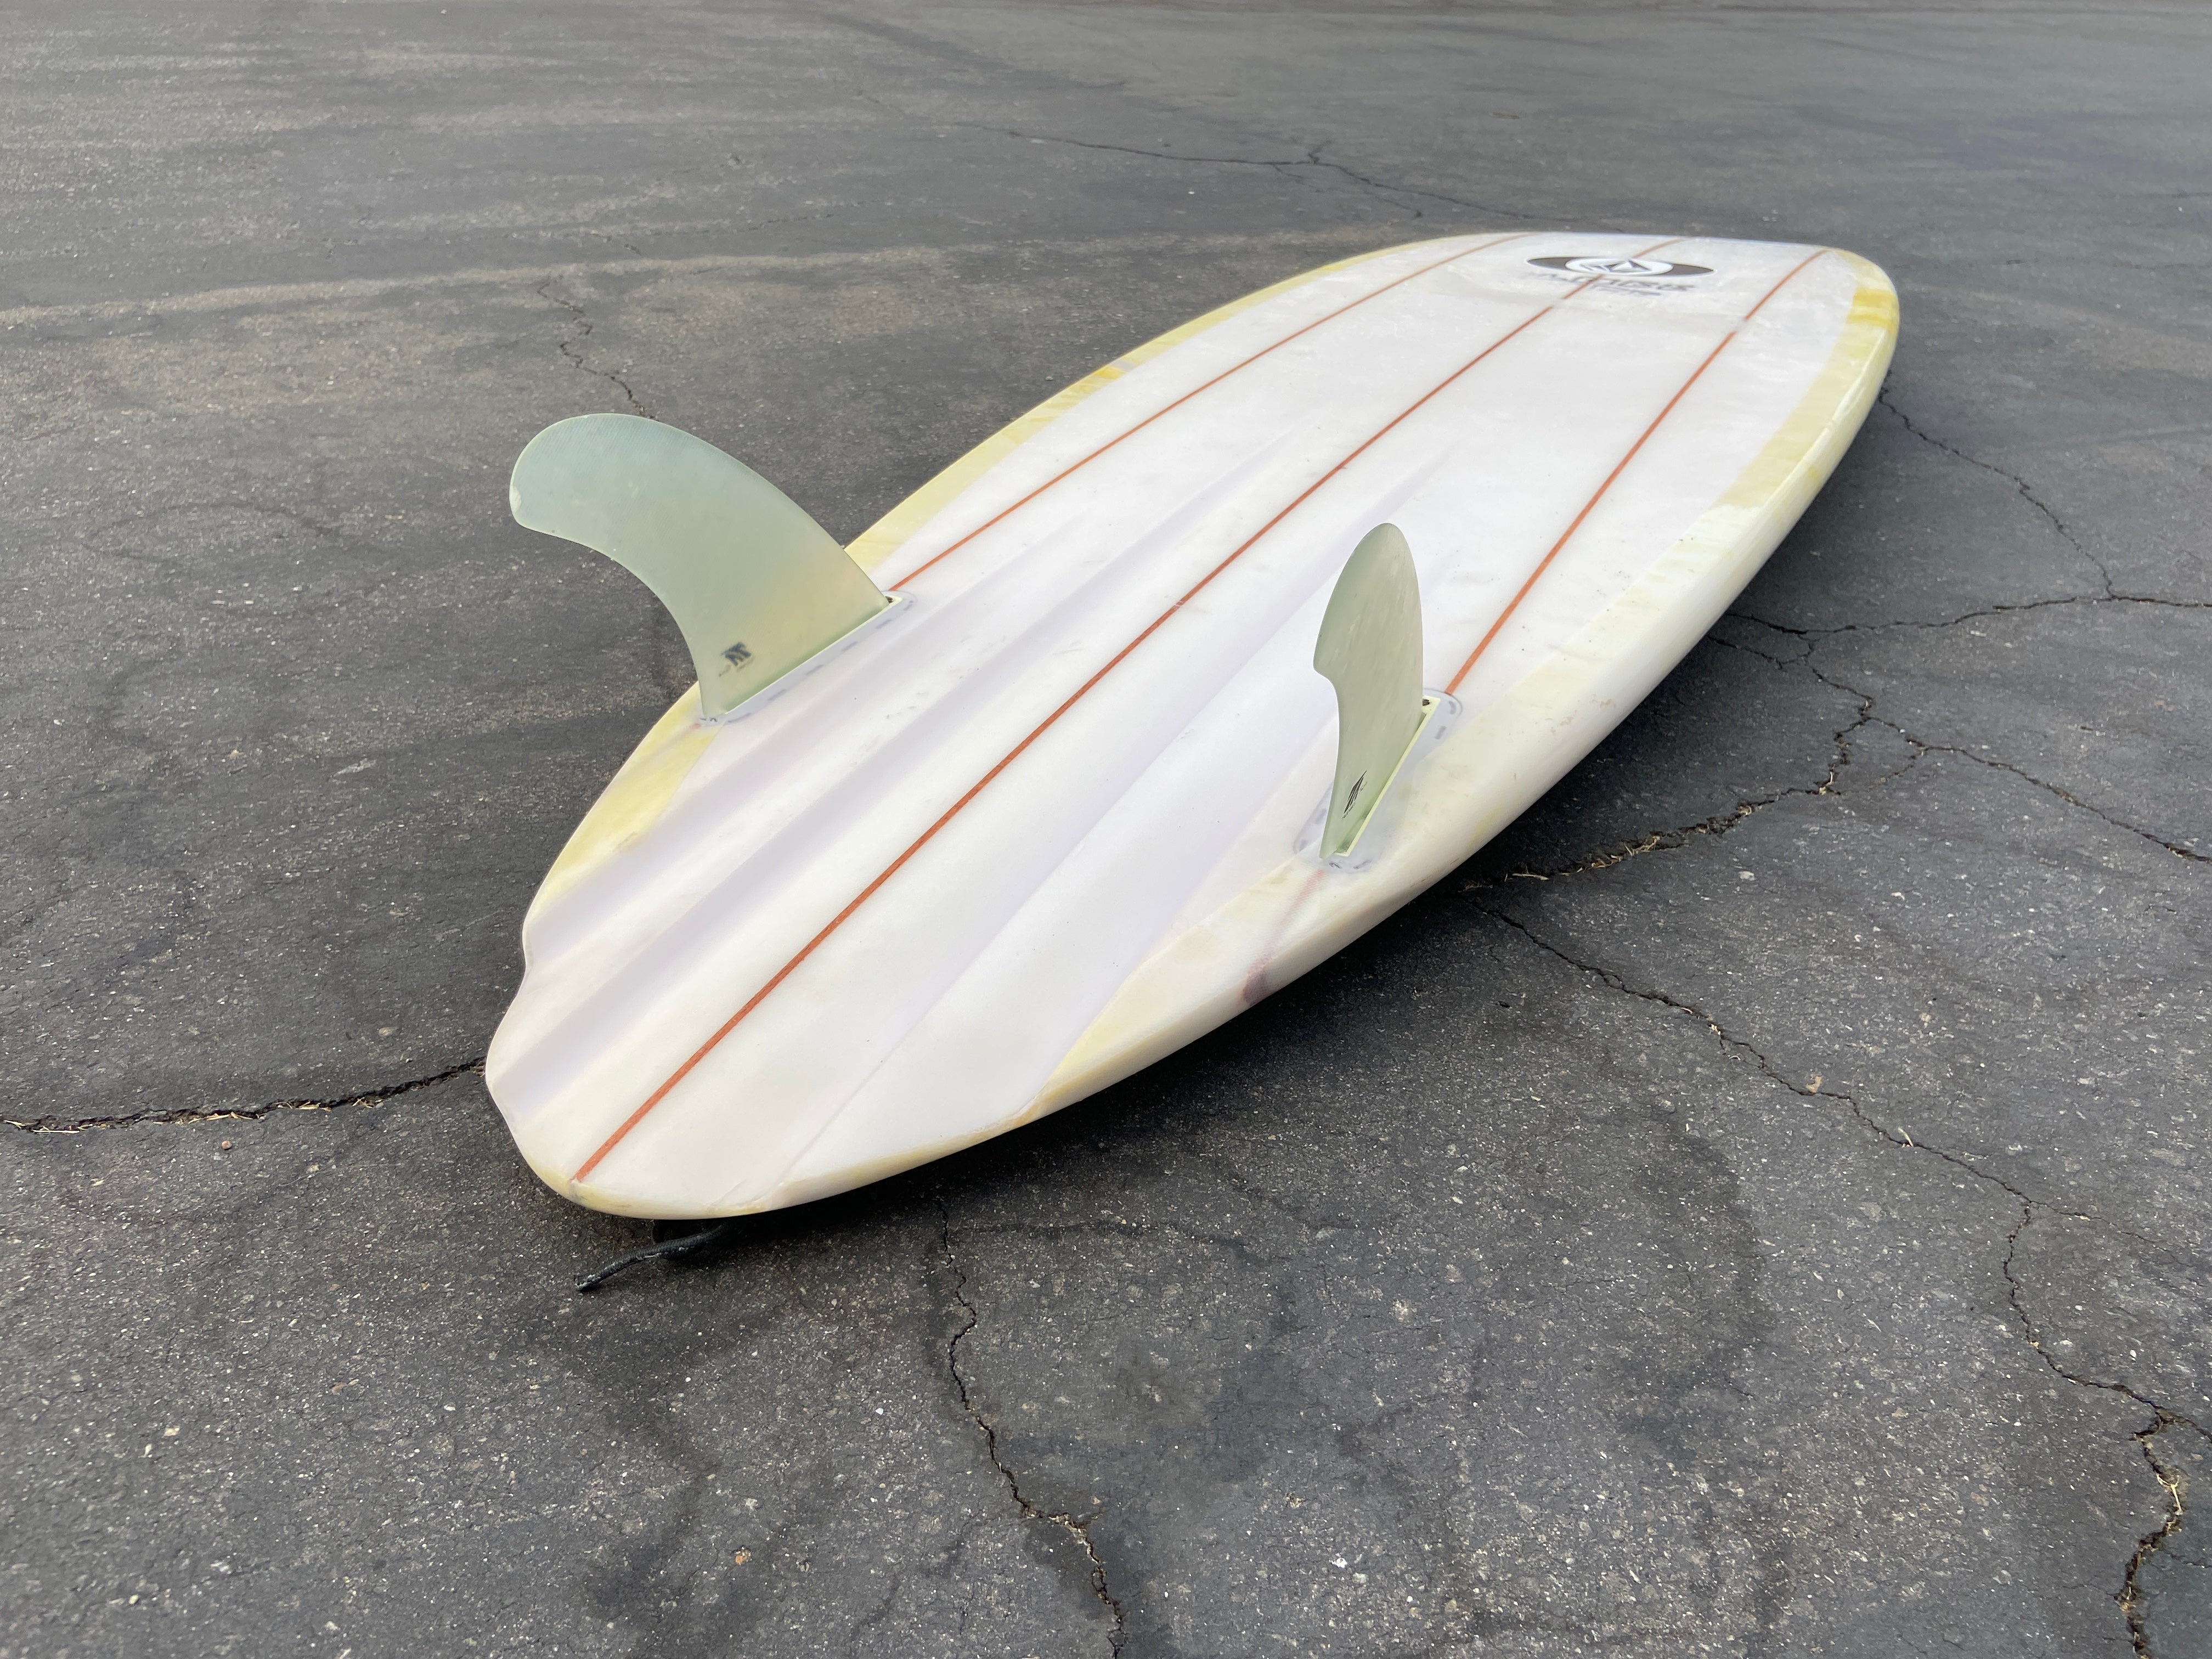 Electric Acid Surfboard Test 6'3